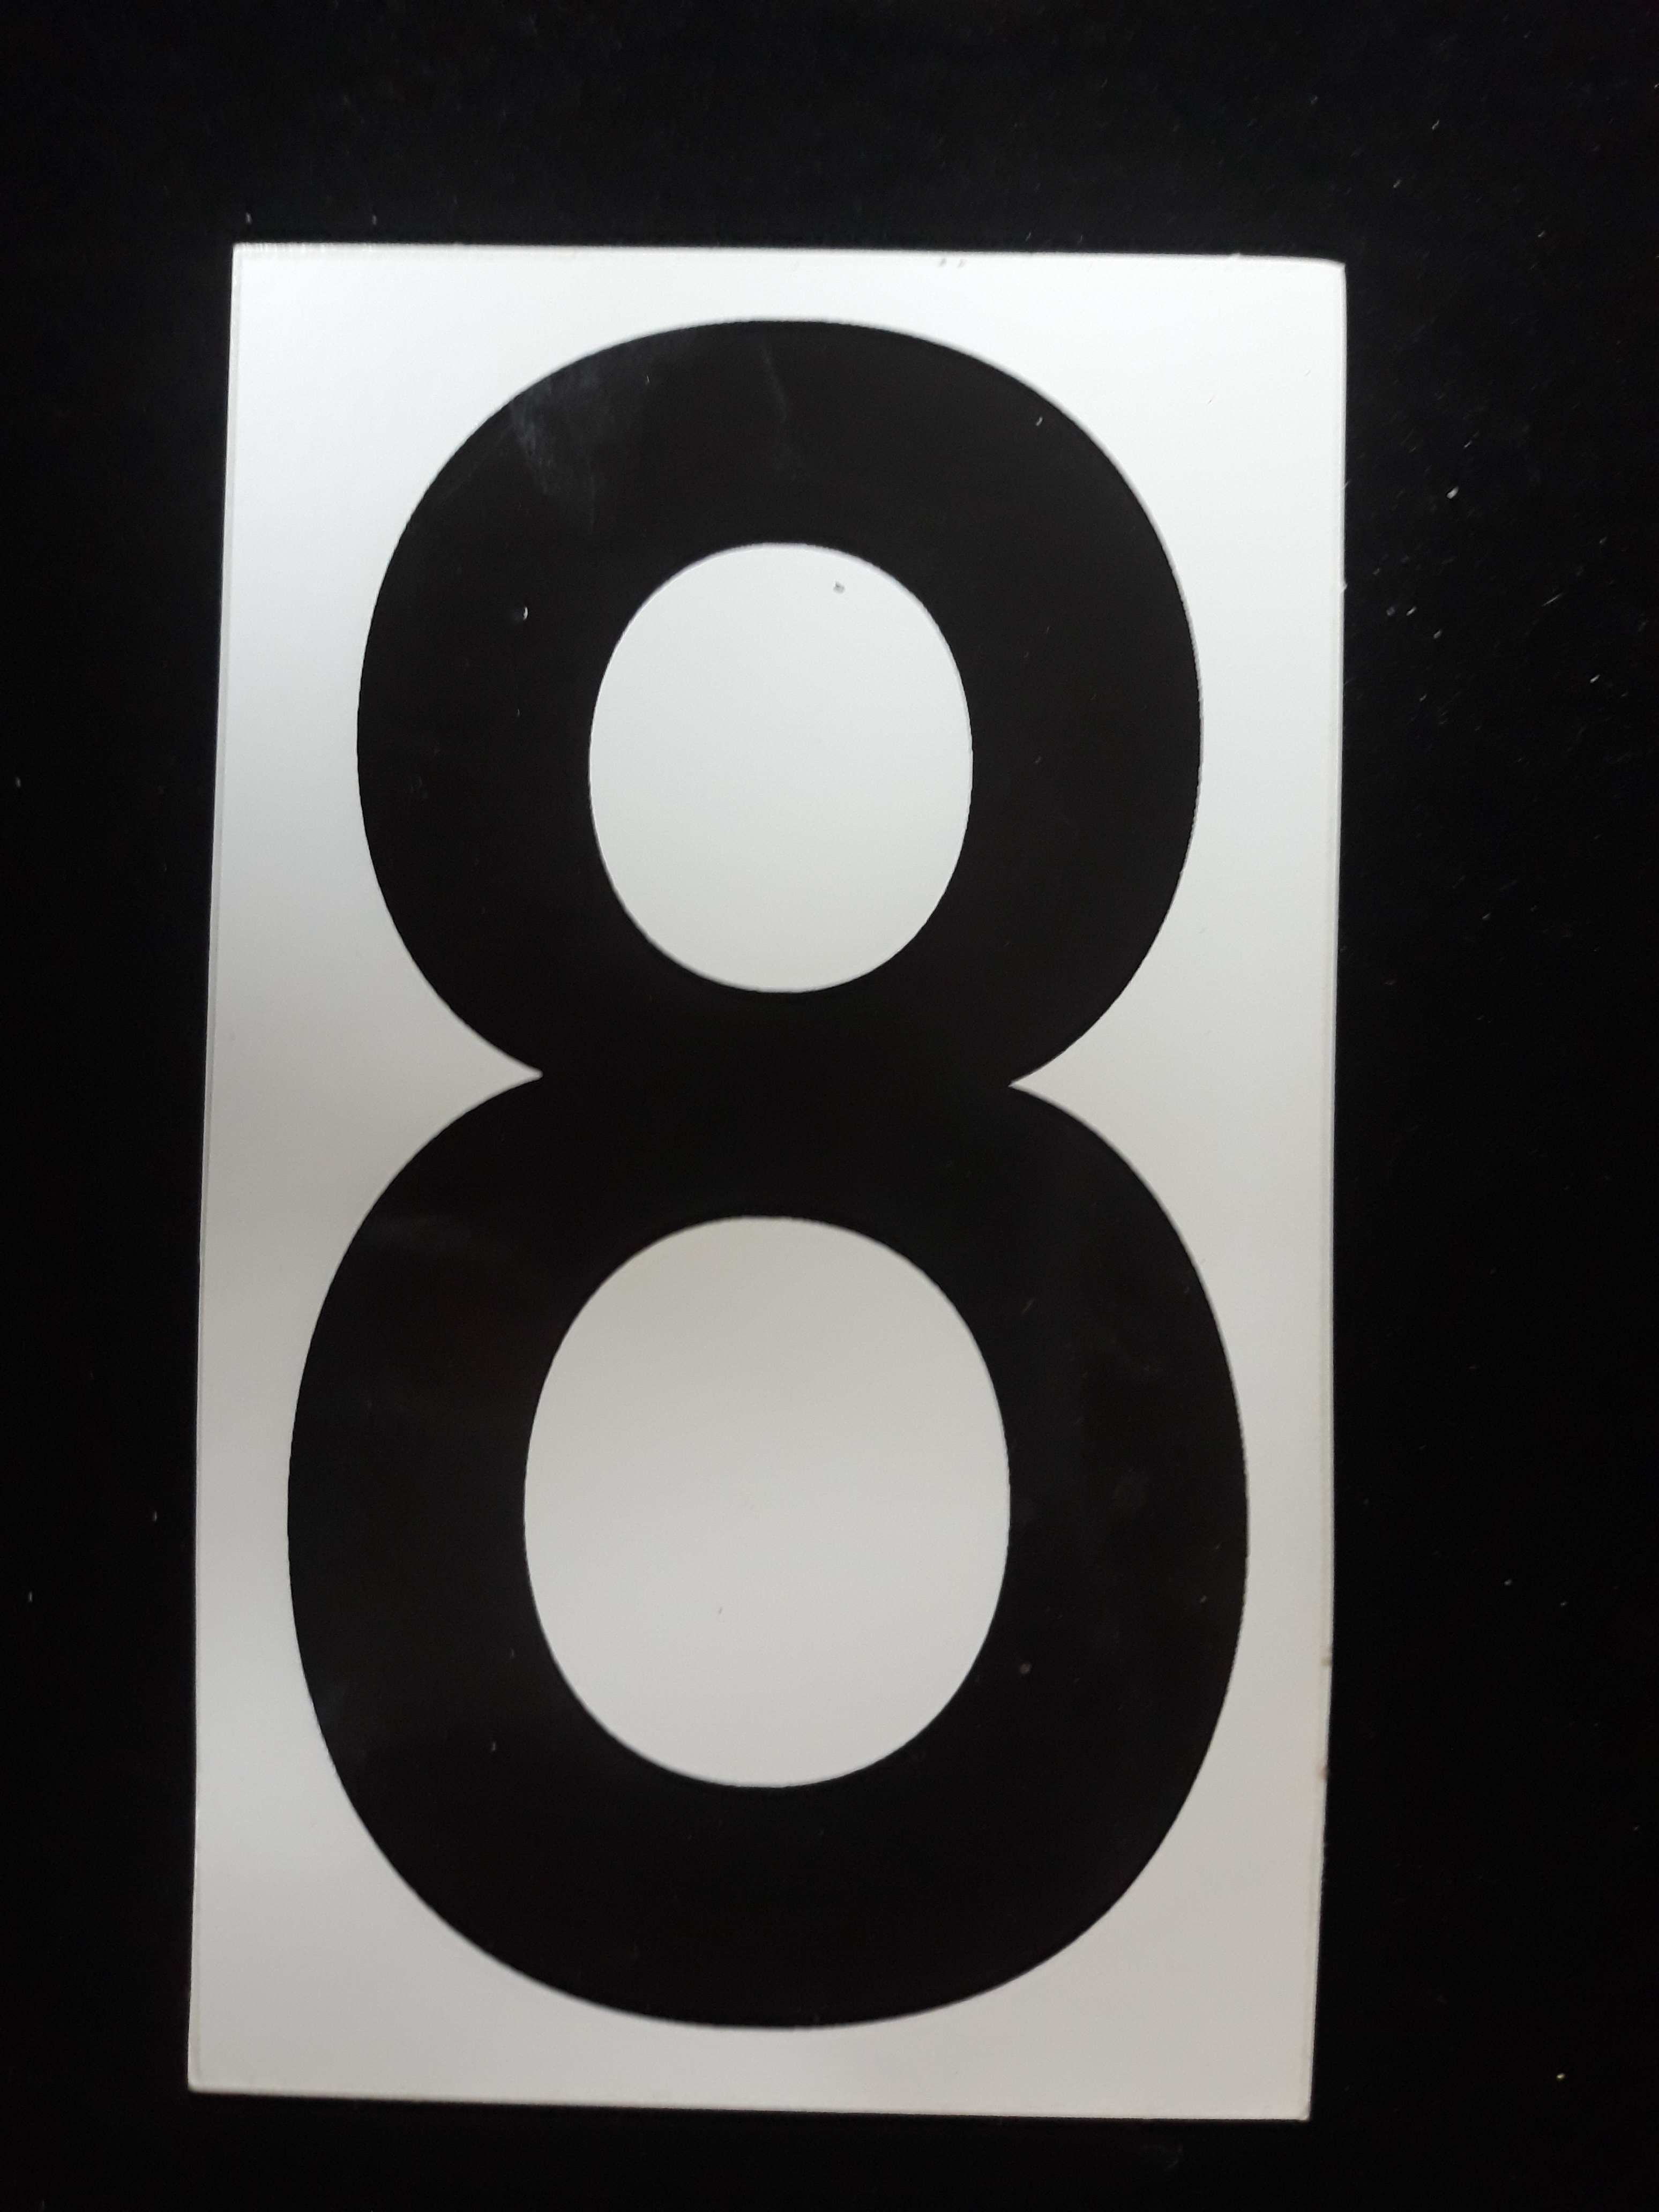 10-5" Sticker Decal Vinyl Adhesive Address Numbers Black & White No.3 USA MADE 